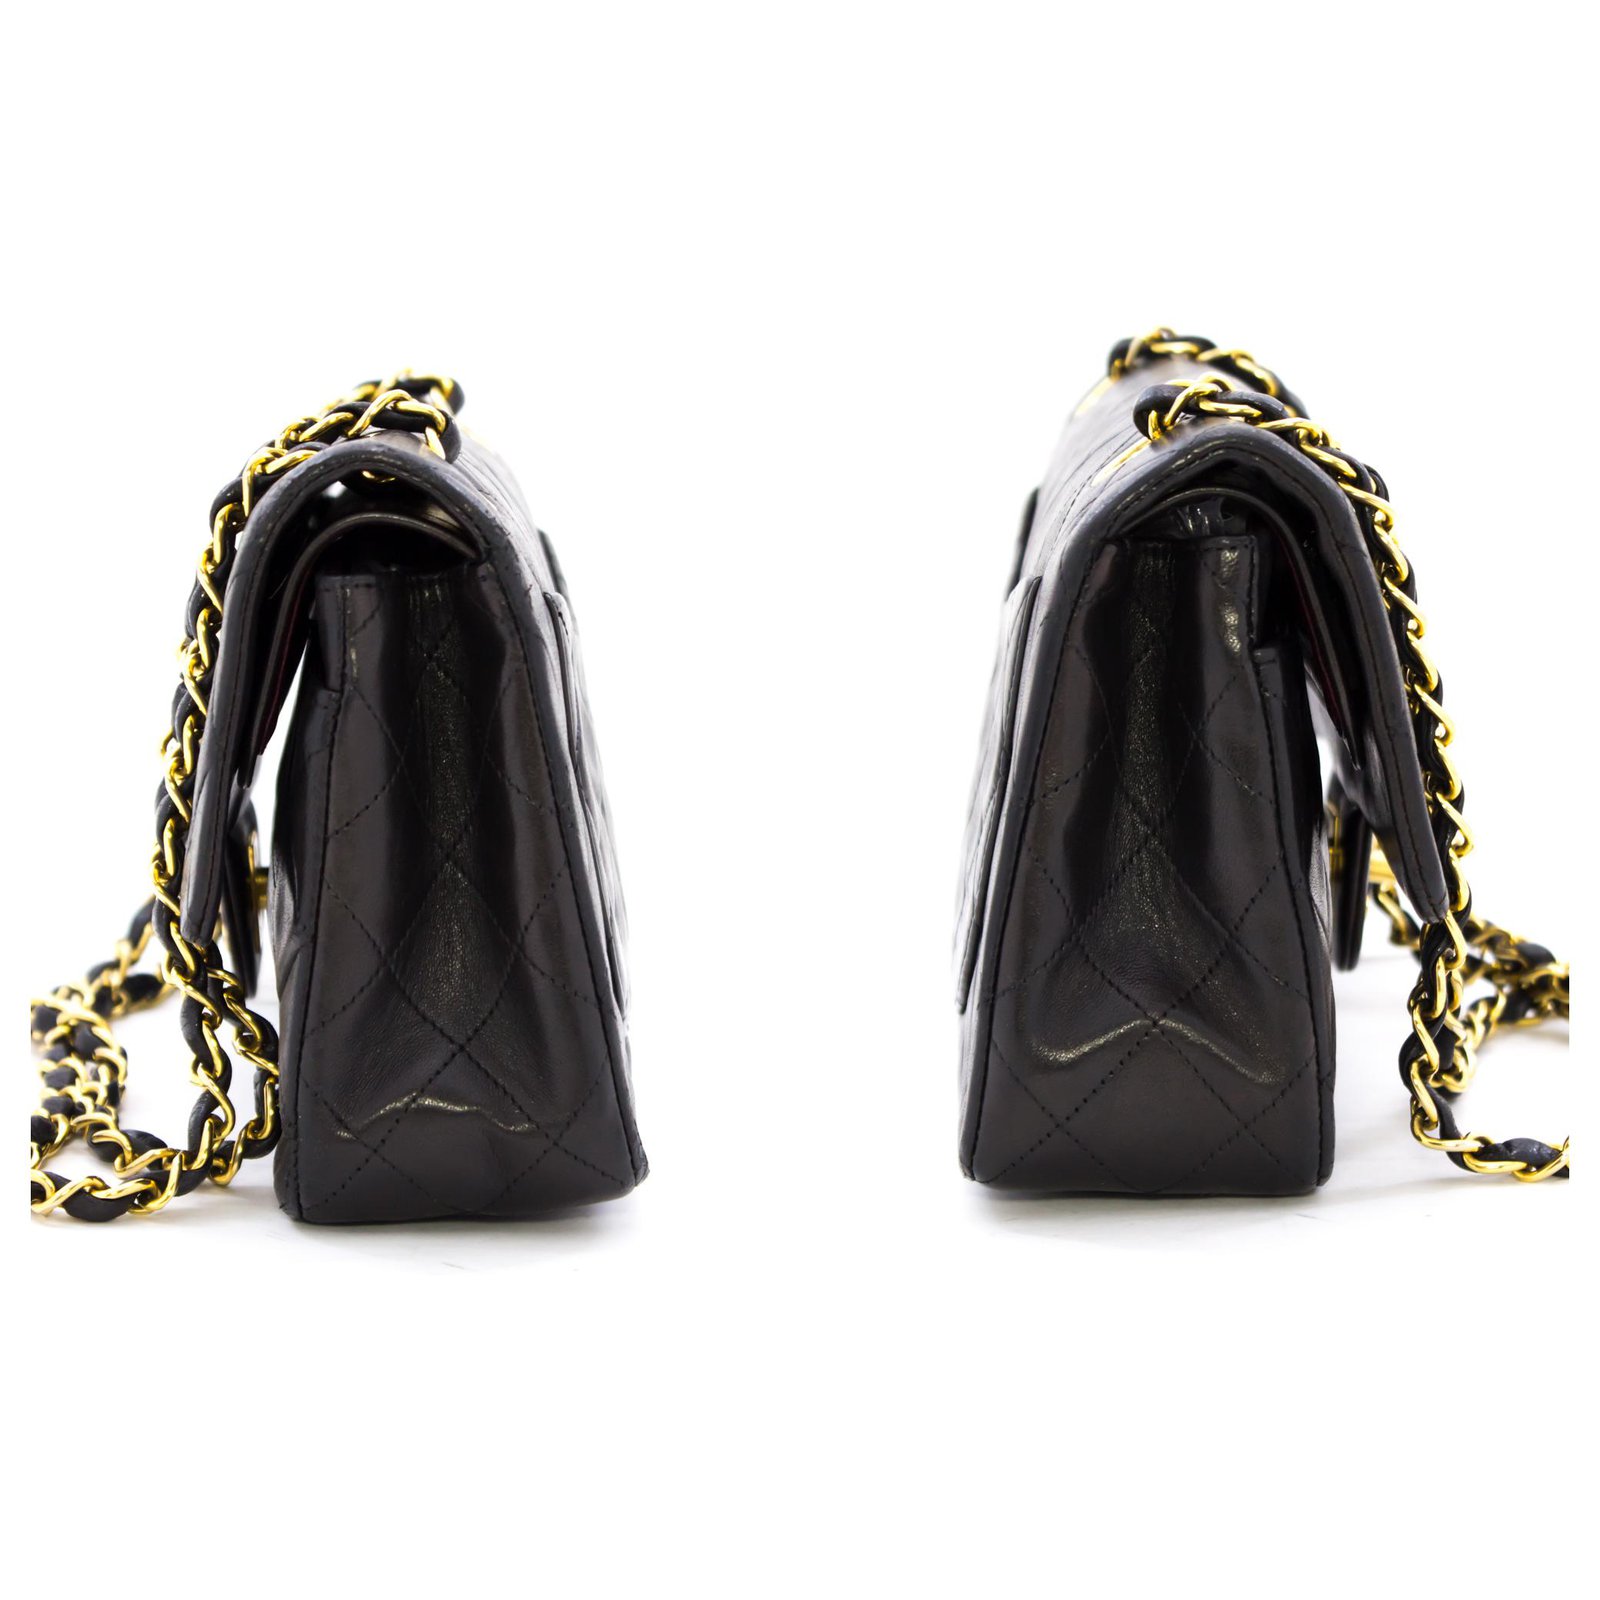 Chanel 2.55 lined flap 9 Classic Chain Shoulder Bag Black Lamb